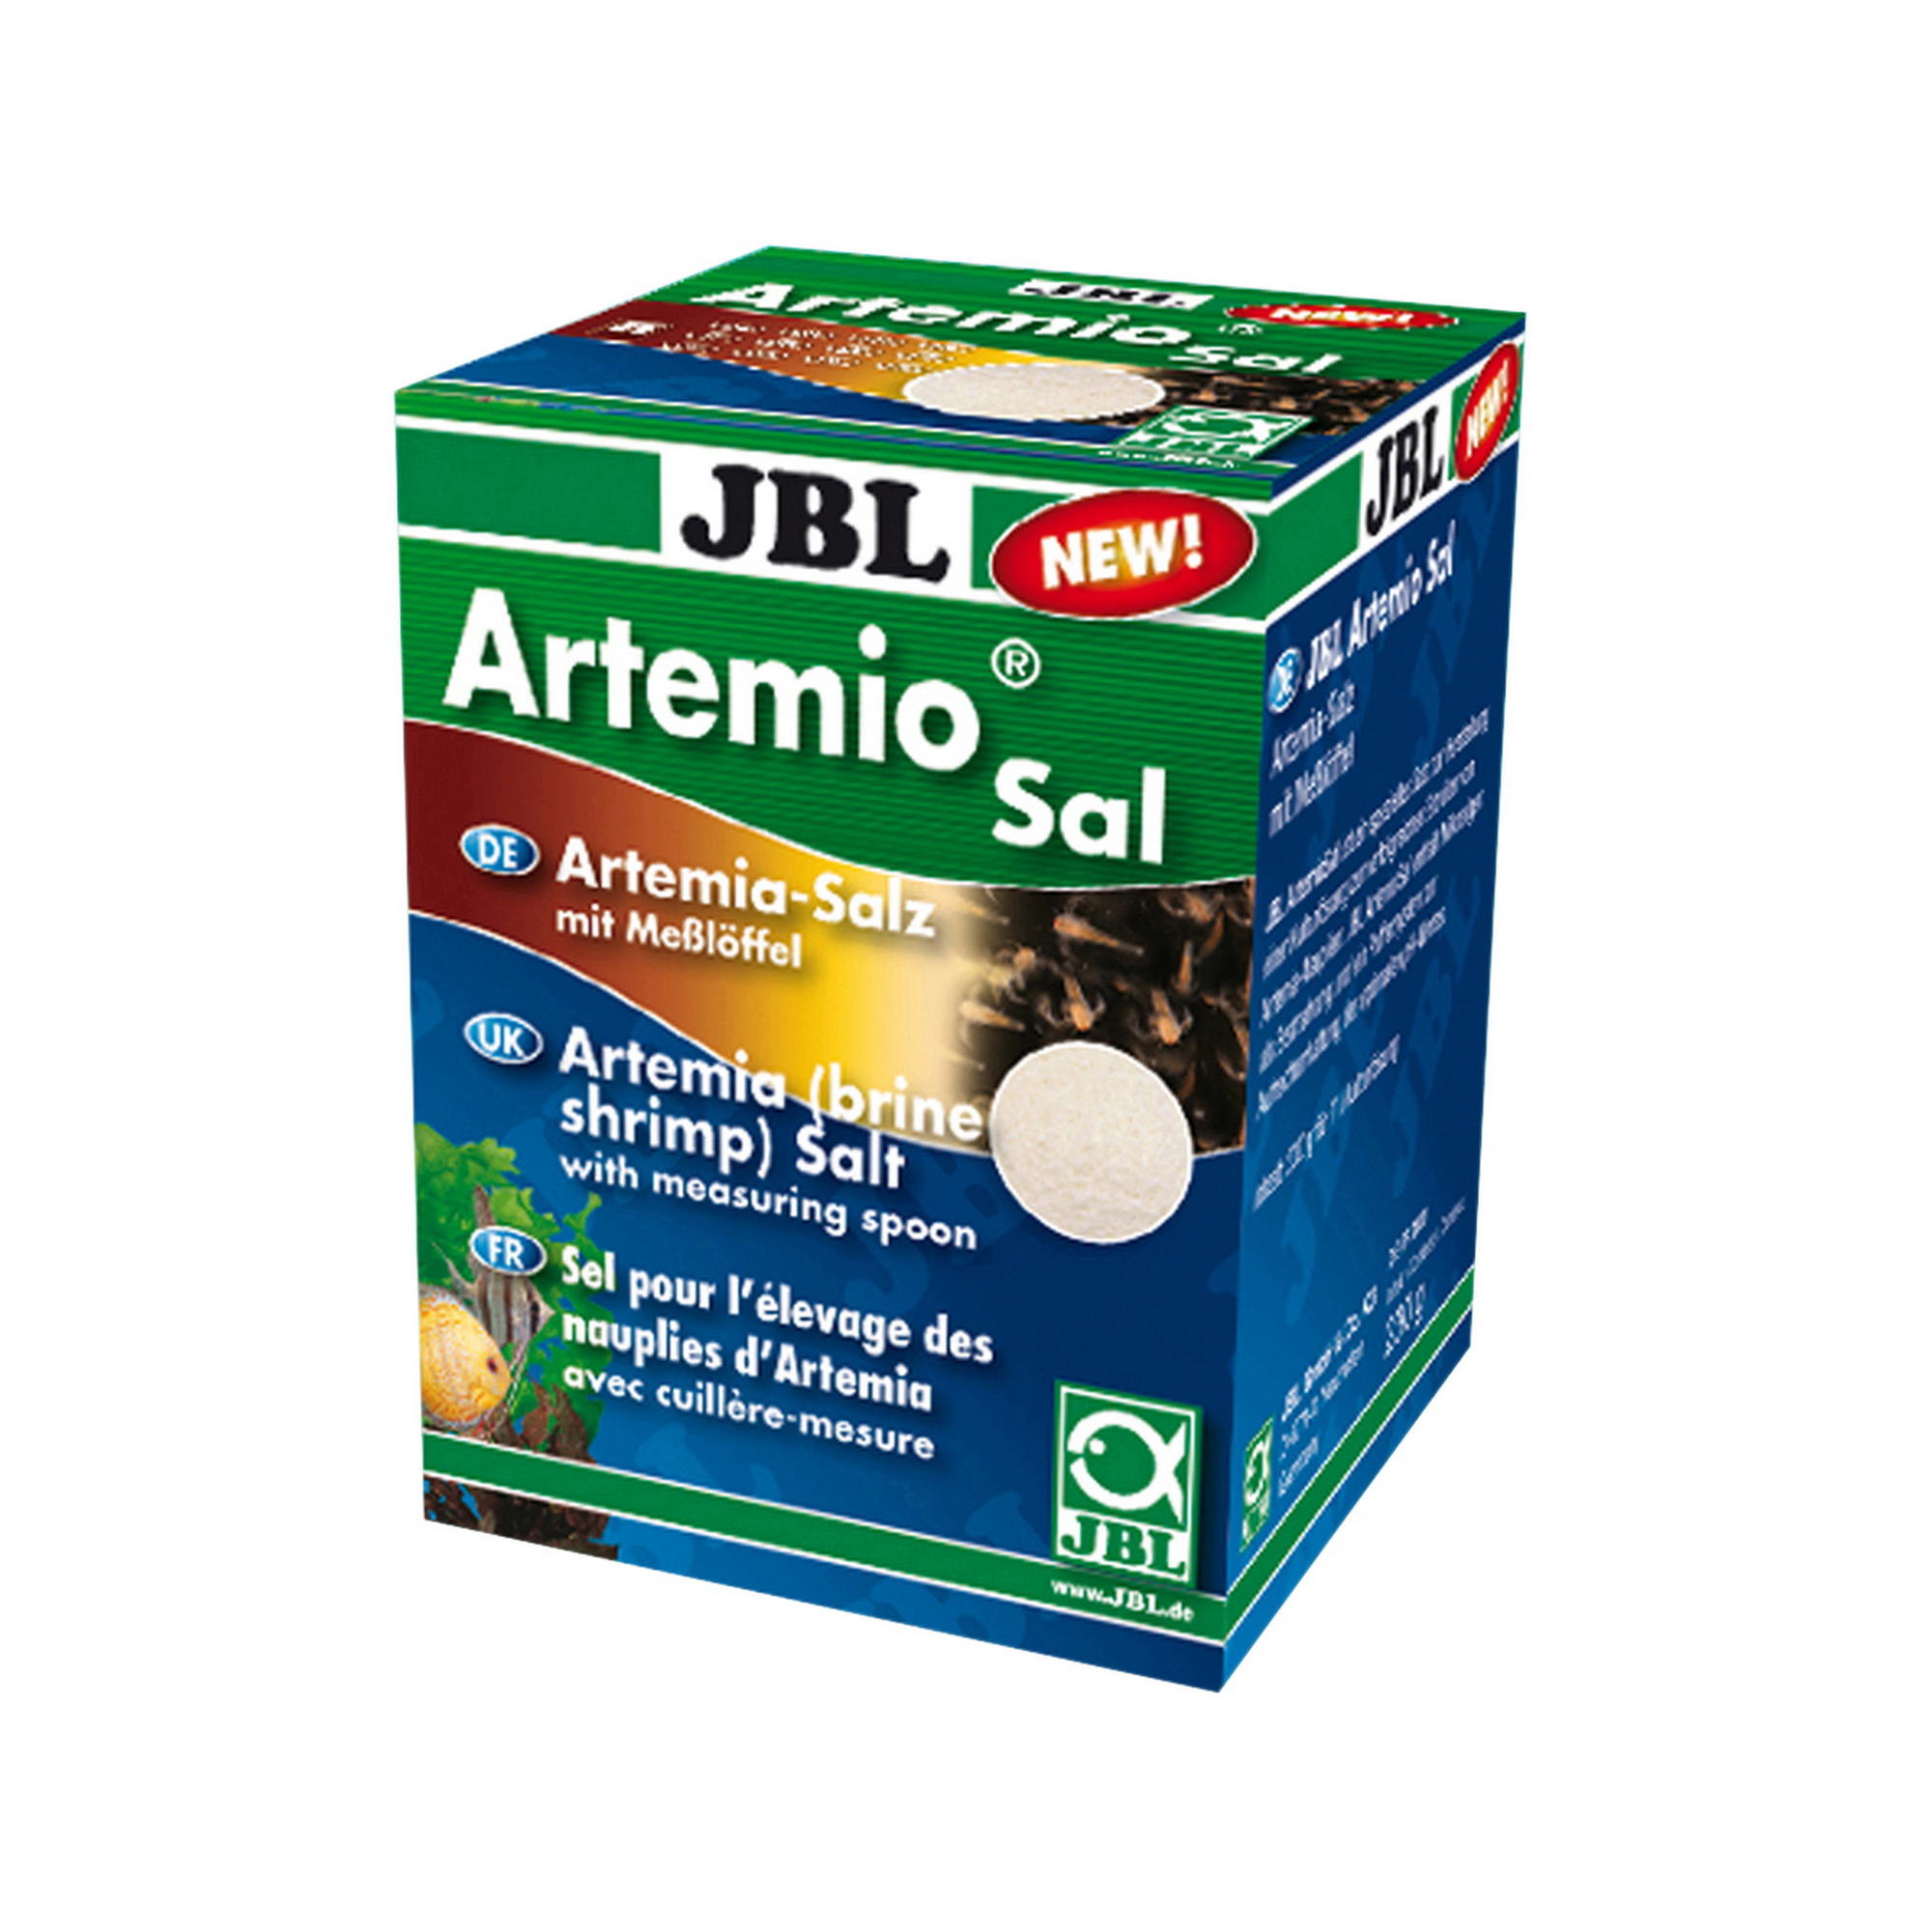 ArtemioSal + product picture